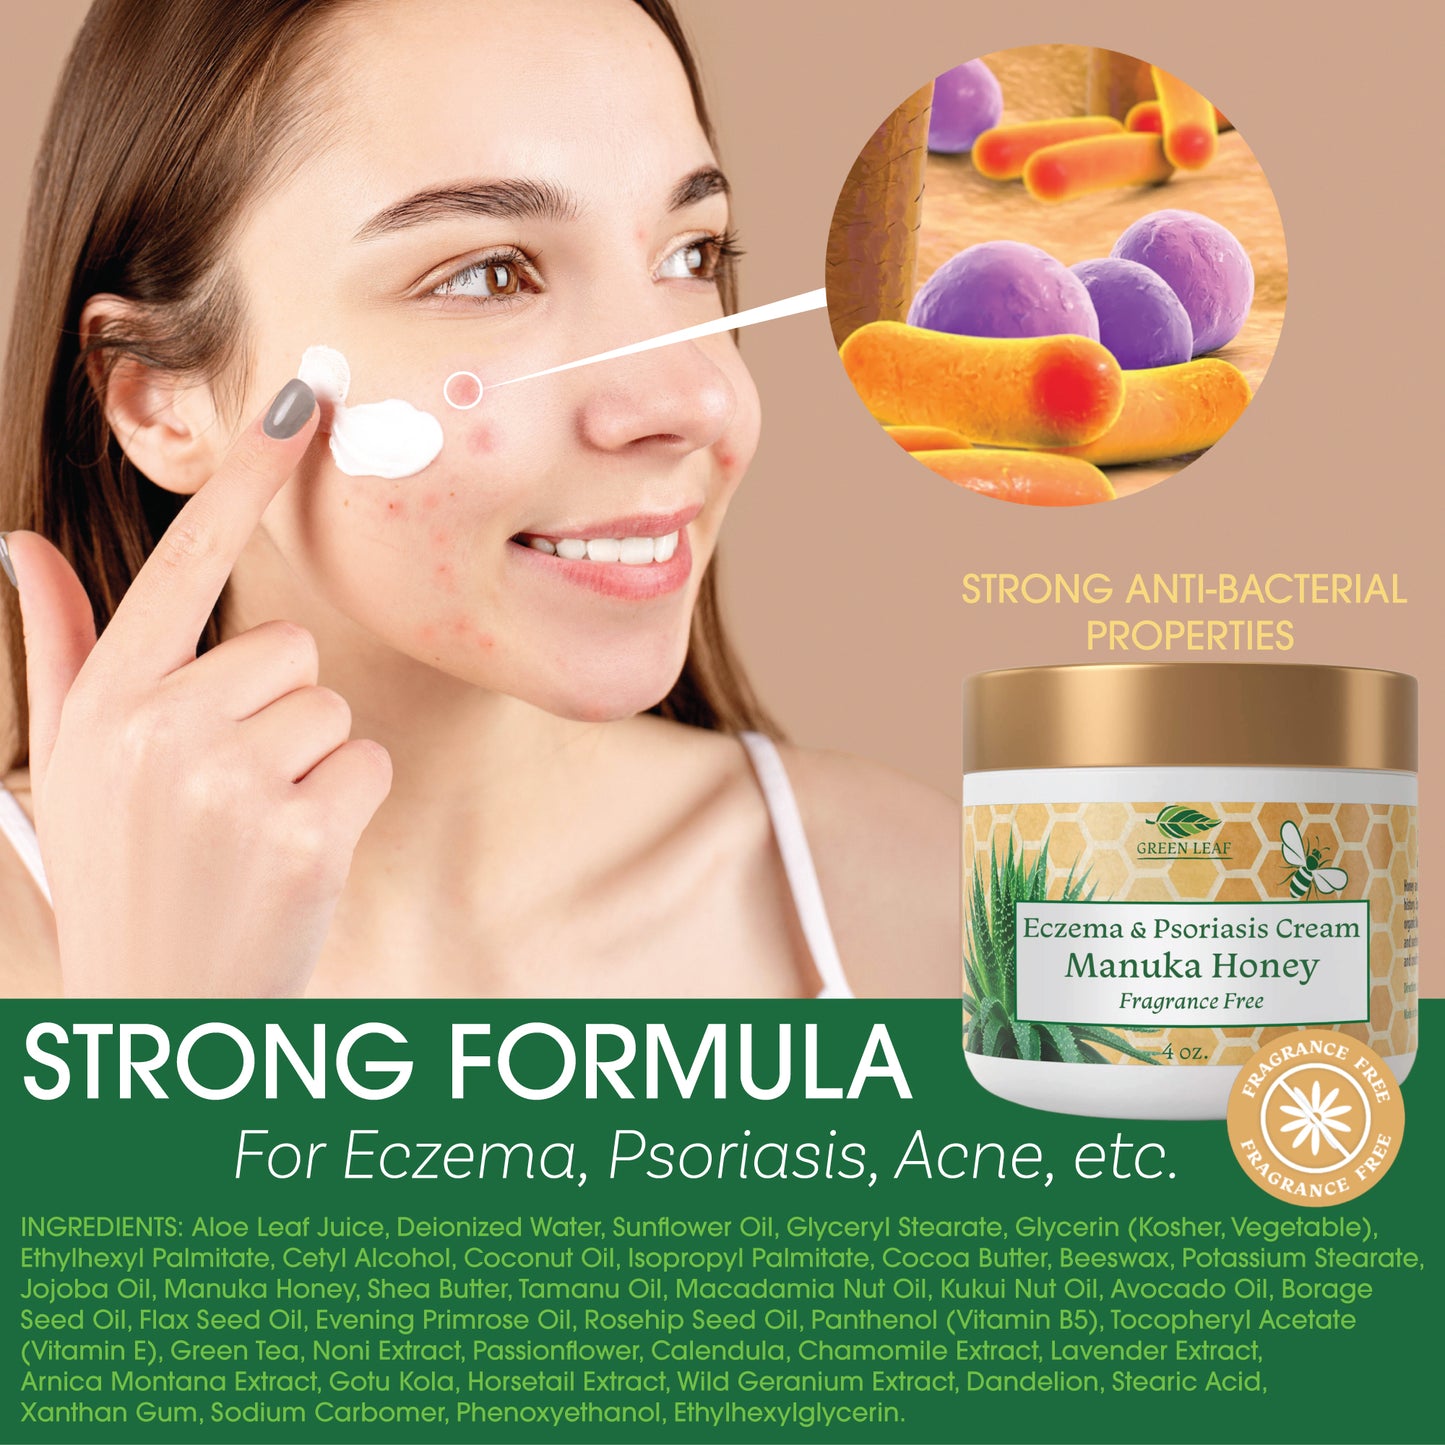 Eczema & Psoriasis Cream with Manuka Honey (Fragrance Free)